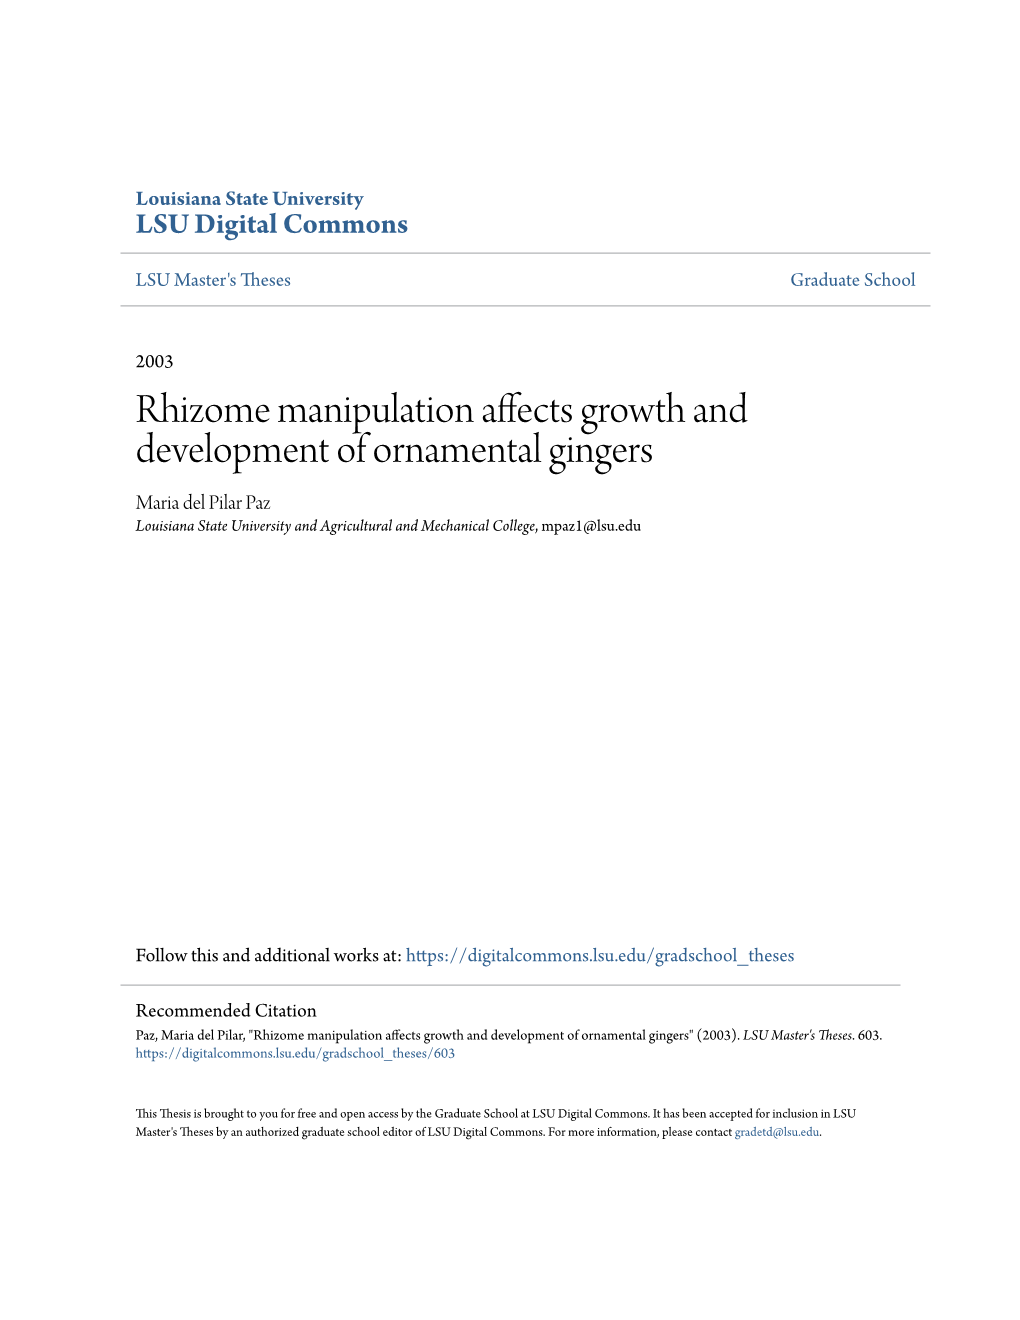 Rhizome Manipulation Affects Growth and Development of Ornamental